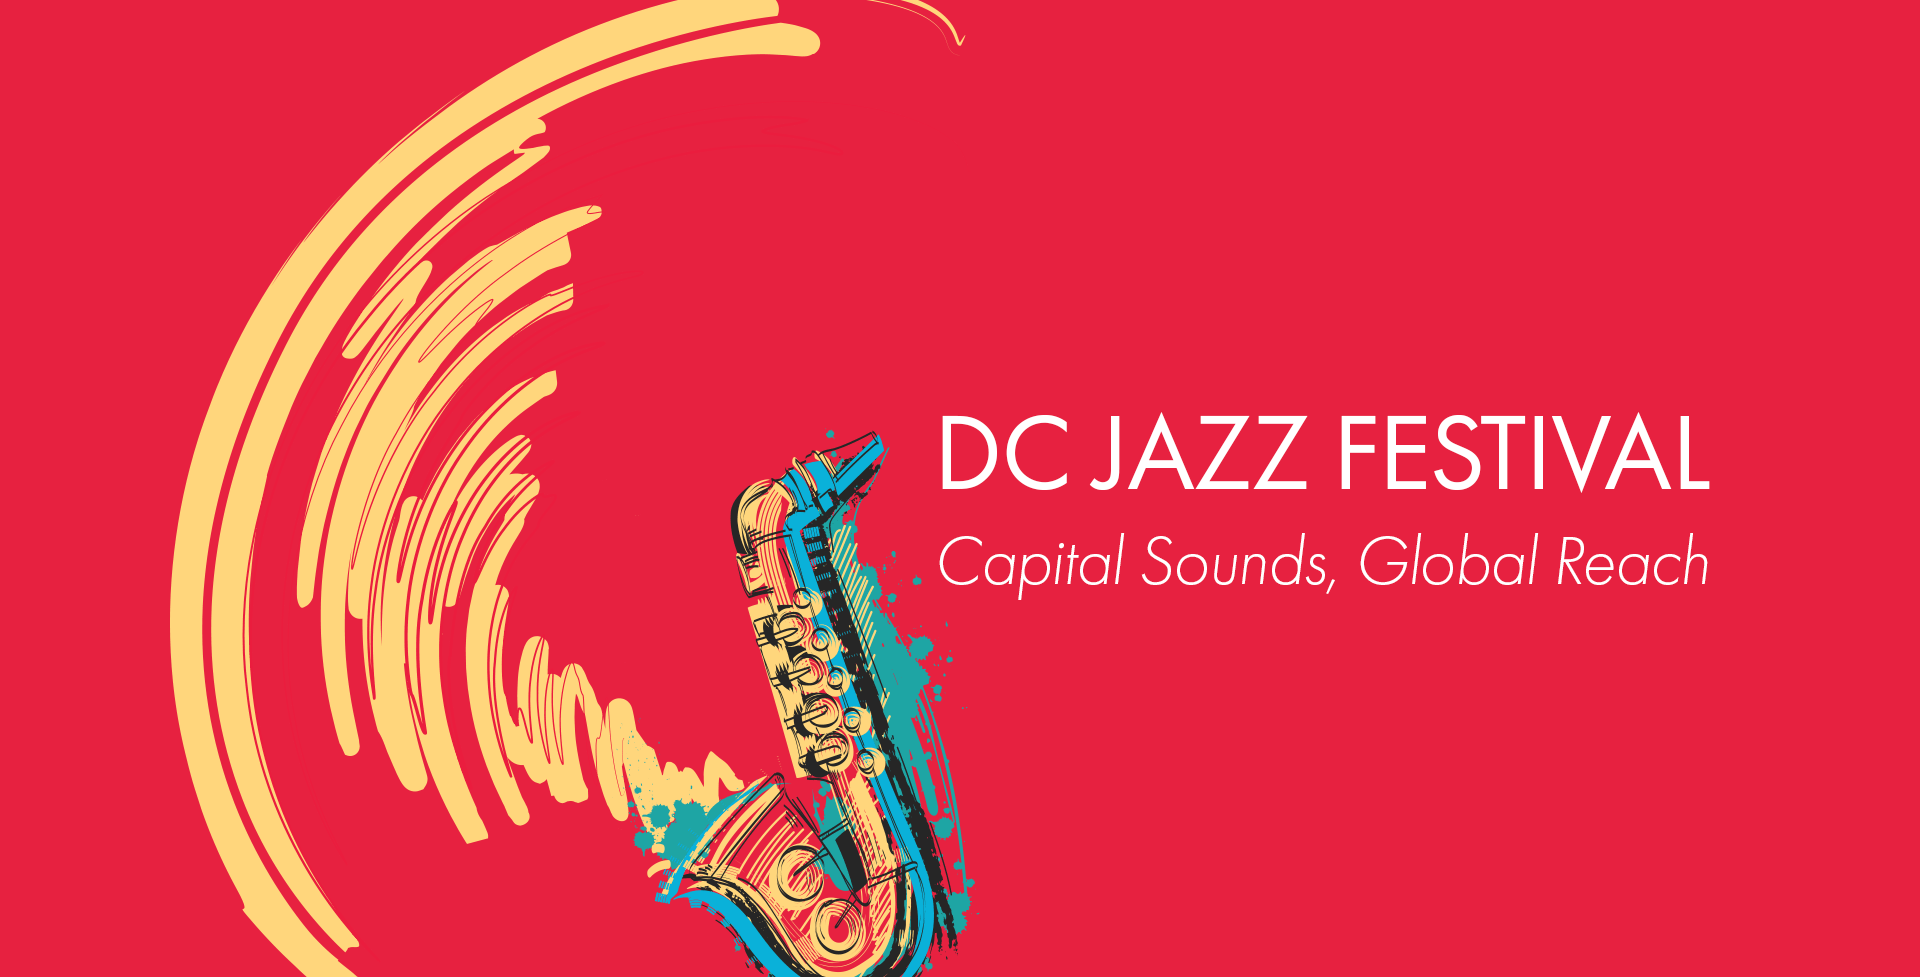 DC Jazz Festival Events DC